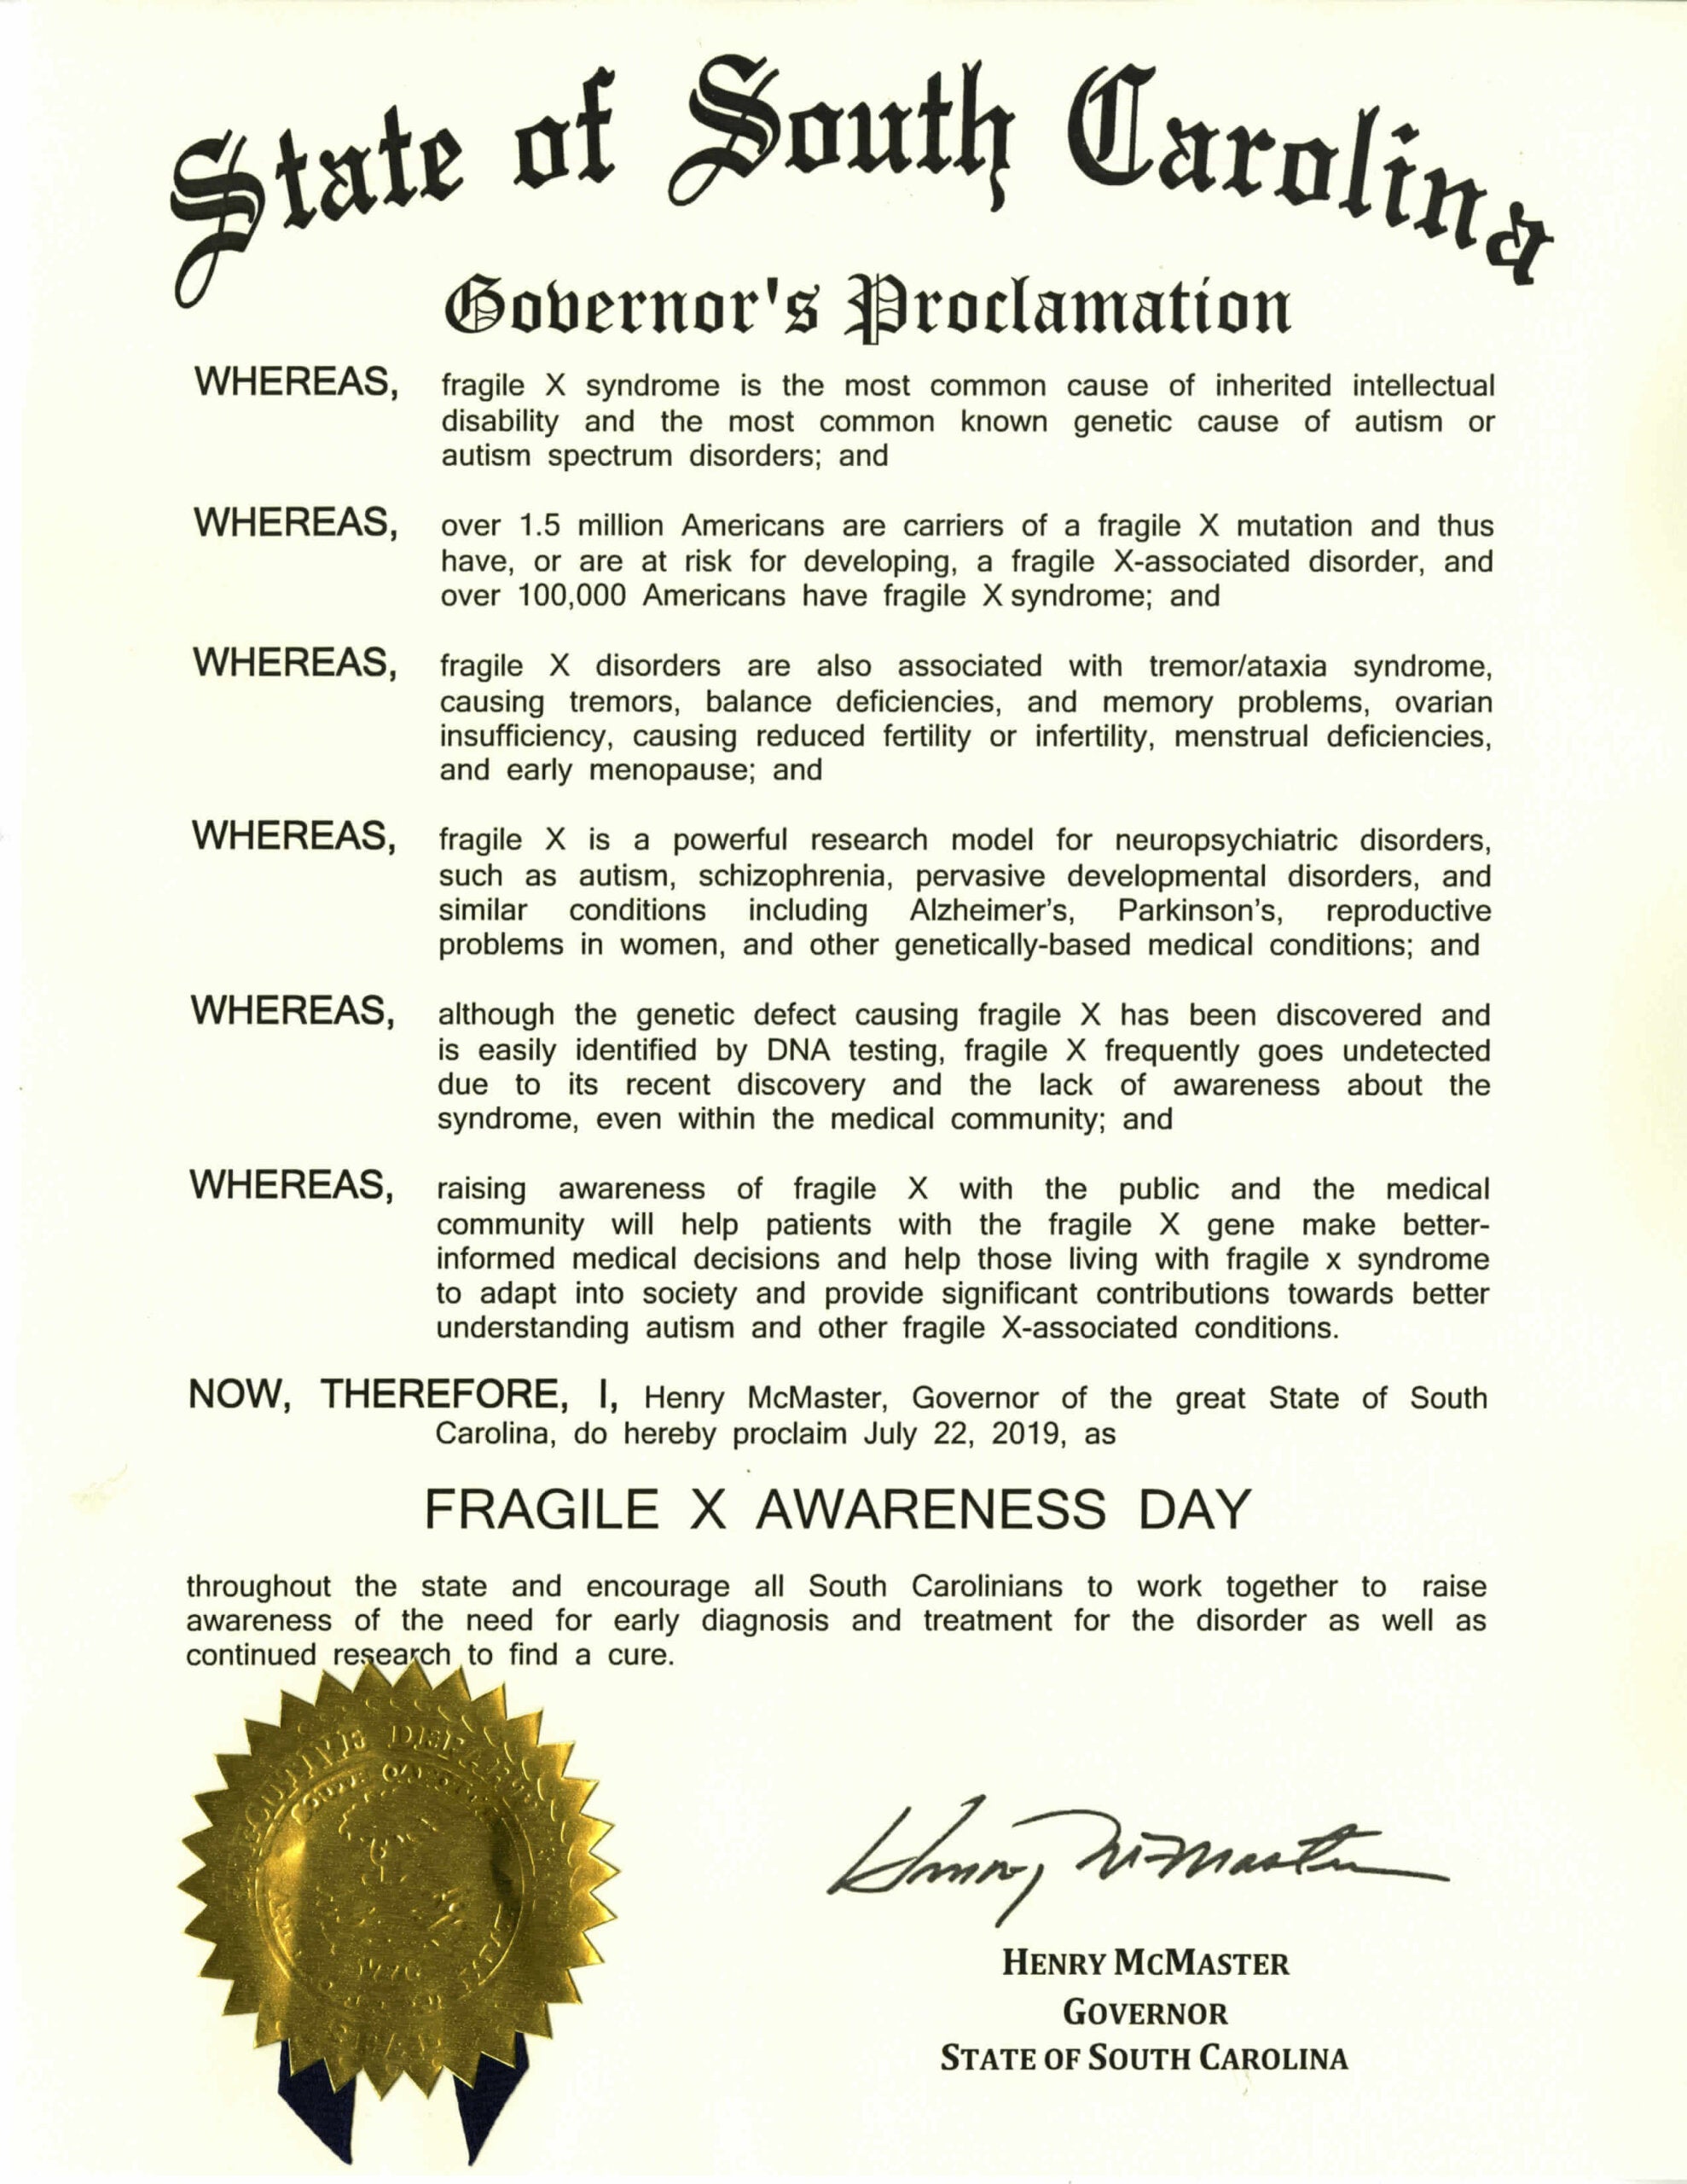 South Carolina Fragile X Awareness Day 2019 proclamation